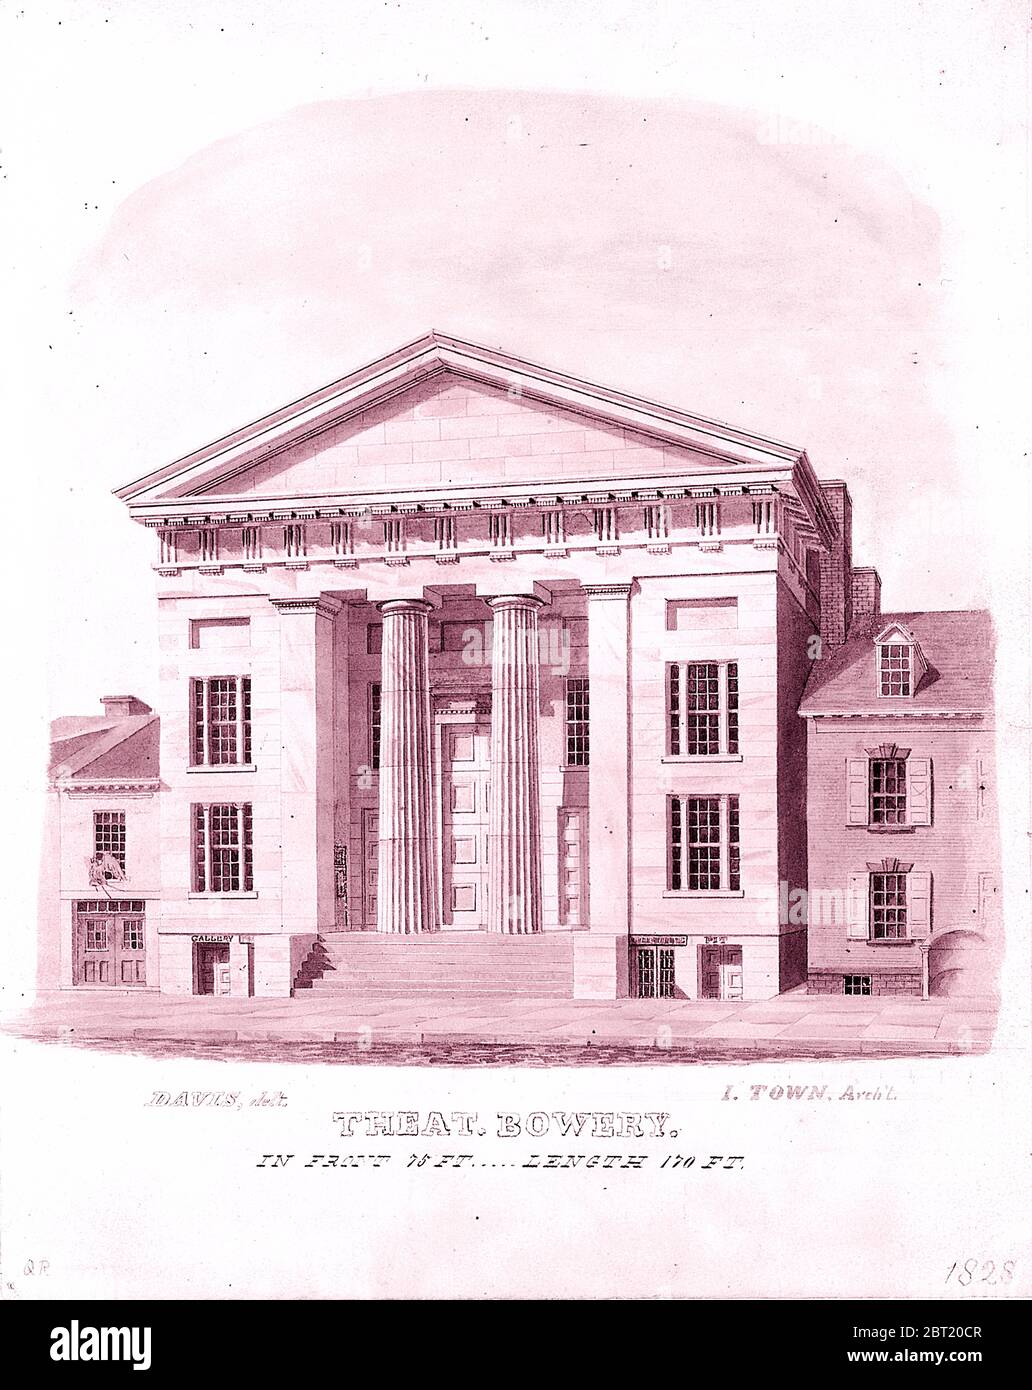 New Bowery Theatre, Elizabeth Street Facade, New York, 1828. Stock Photo